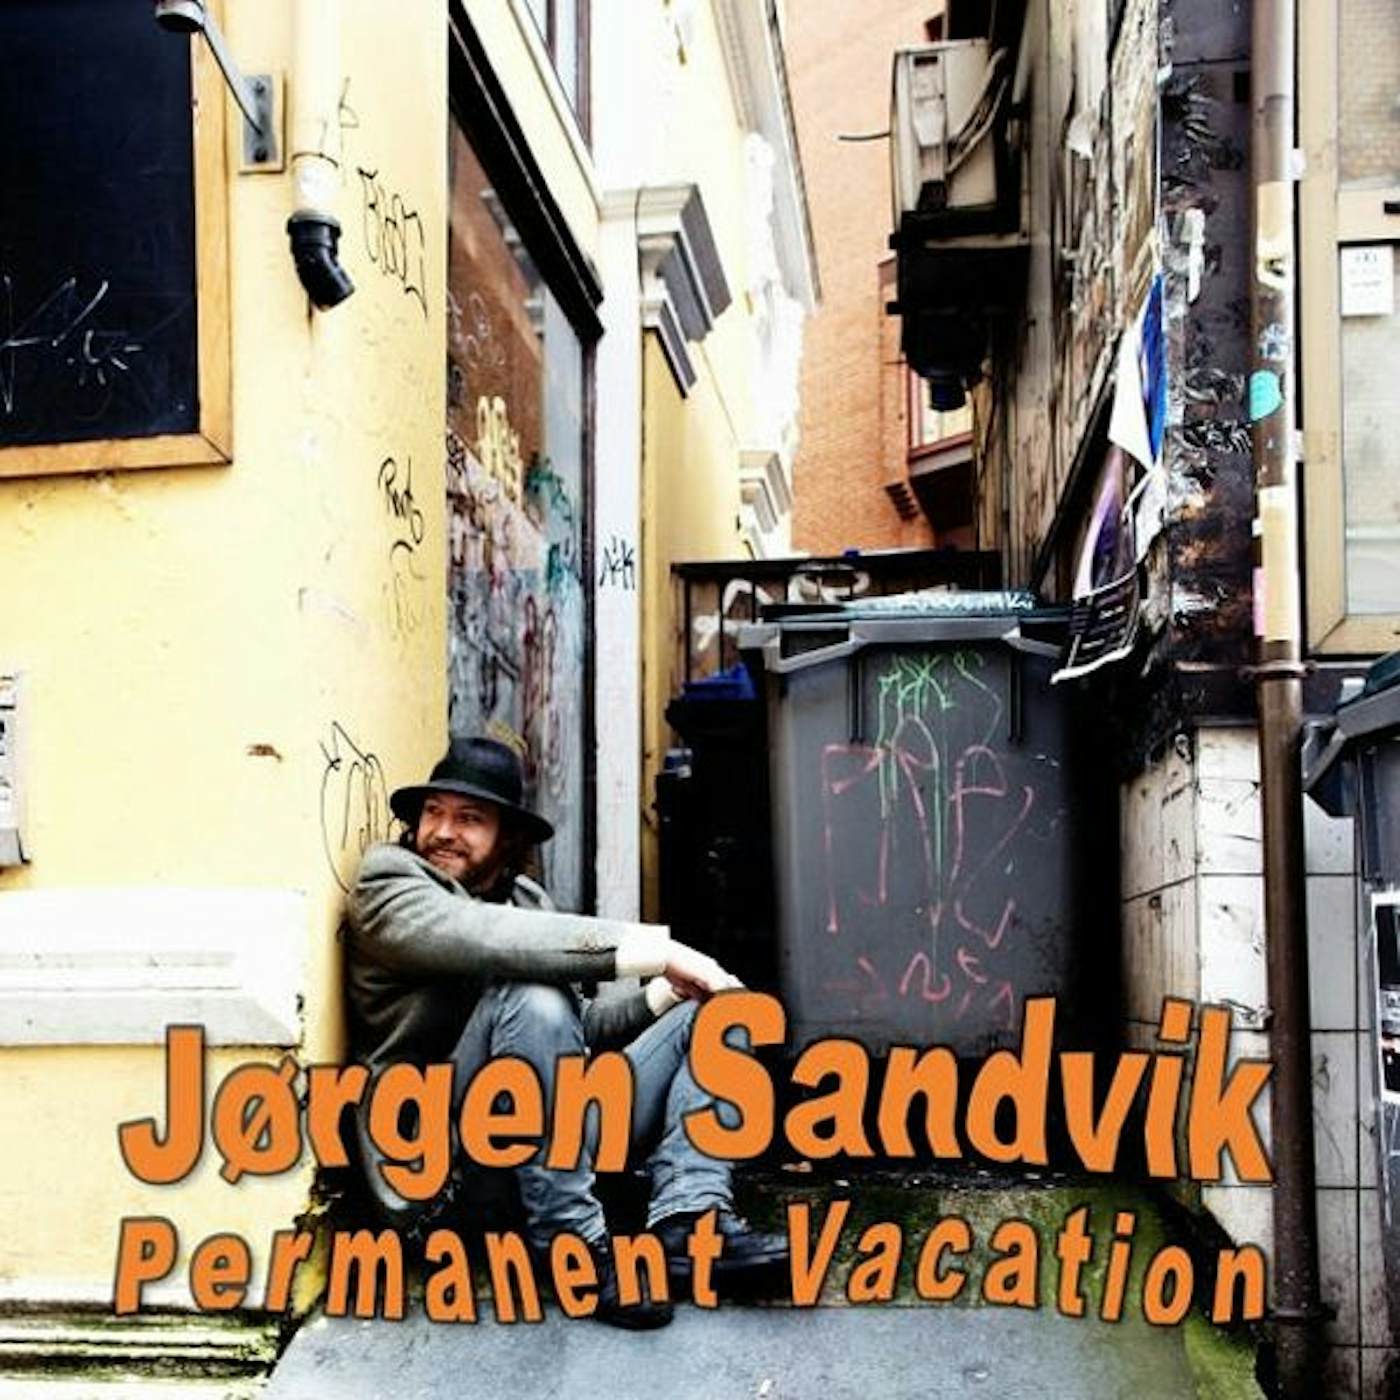 Jørgen Sandvik LP - Permanent Vacation (Vinyl)